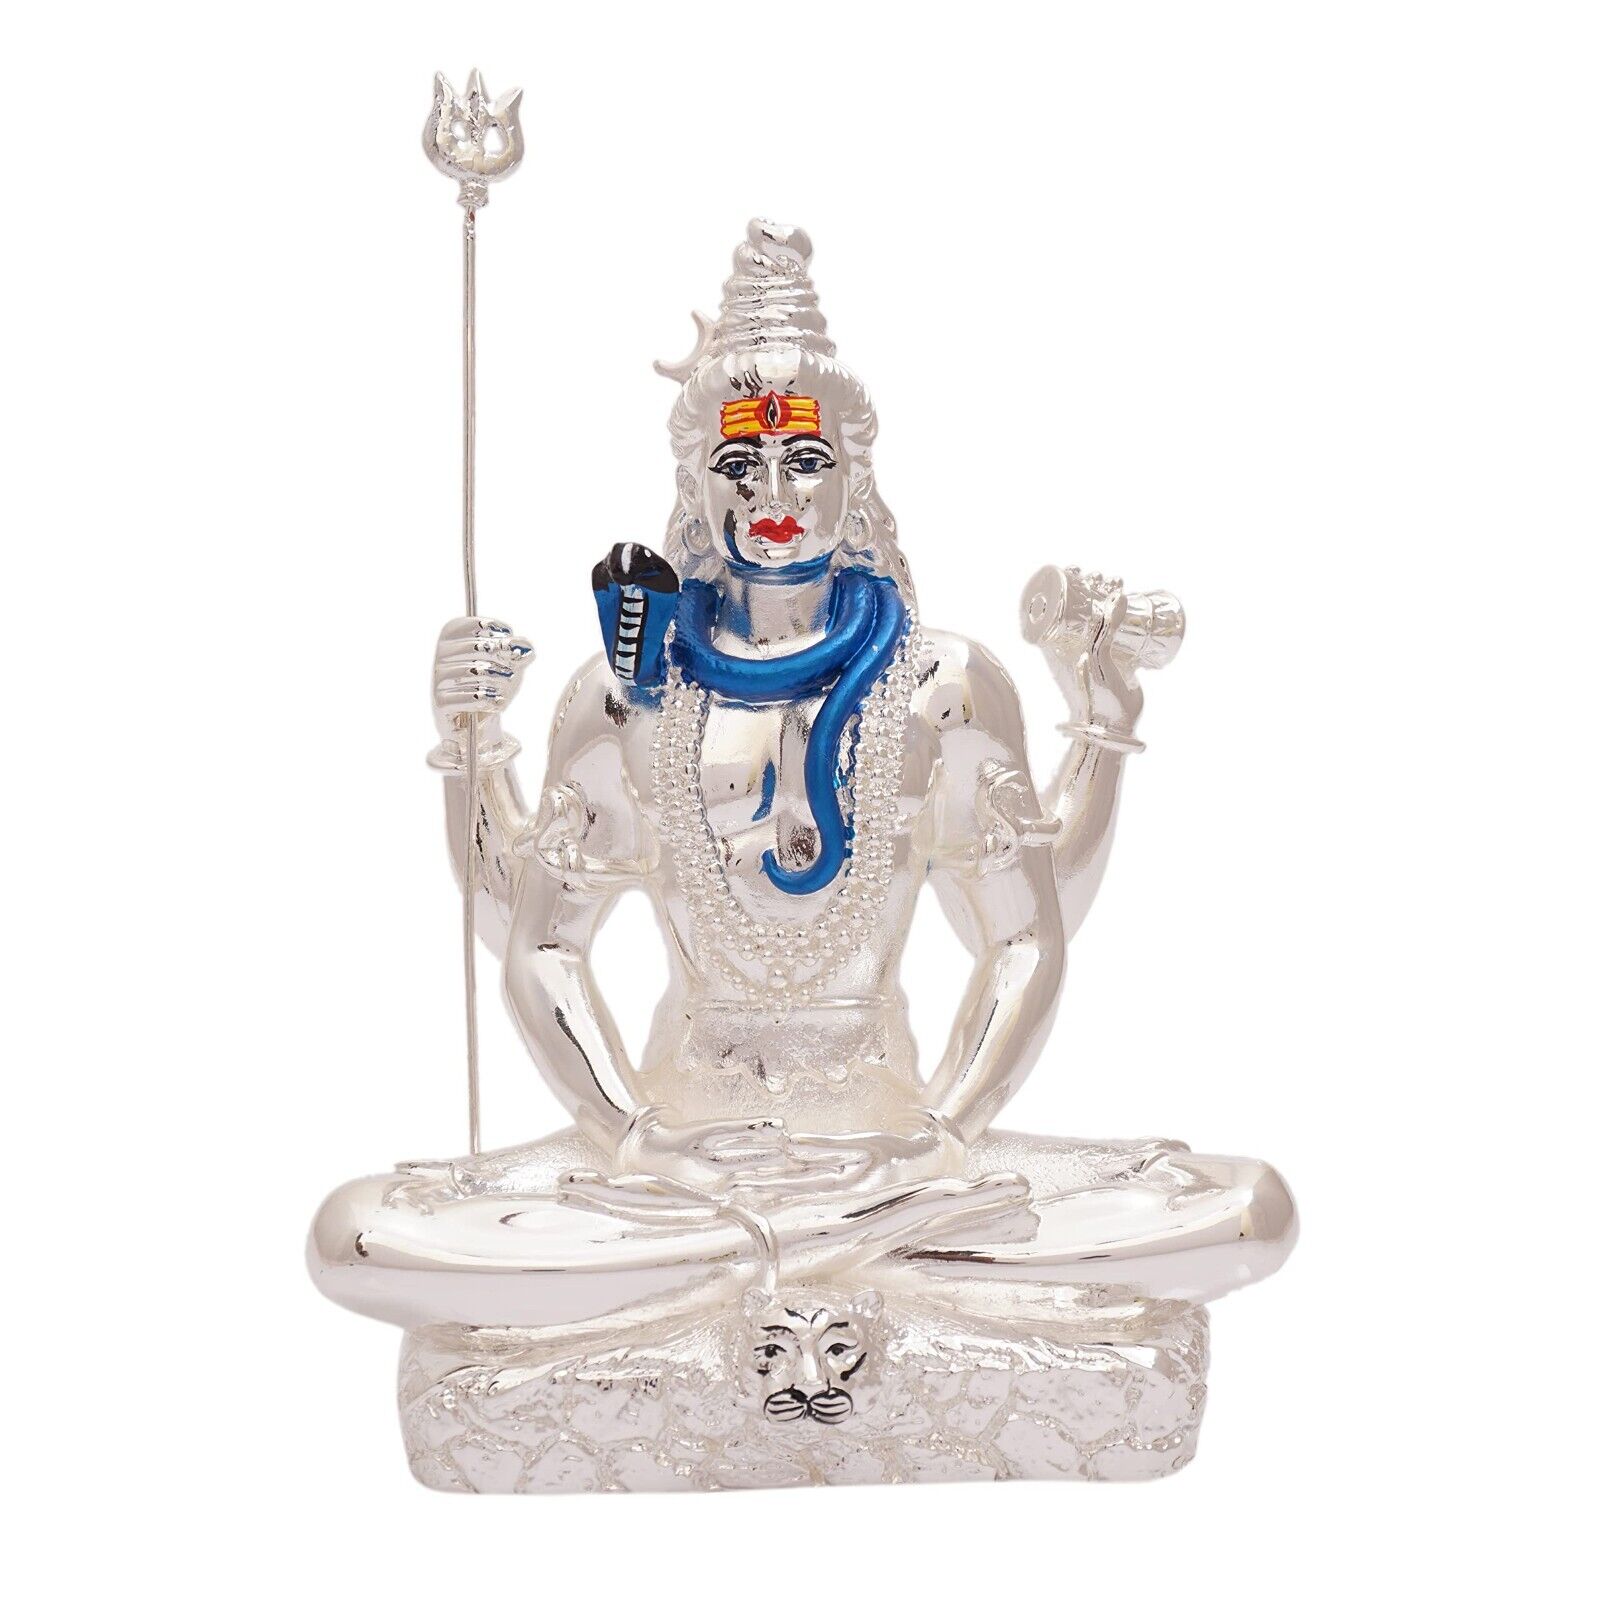 Handmade Resin Hindu God Lord Shiv Rare Figure Statue For Home Office Decor Gift